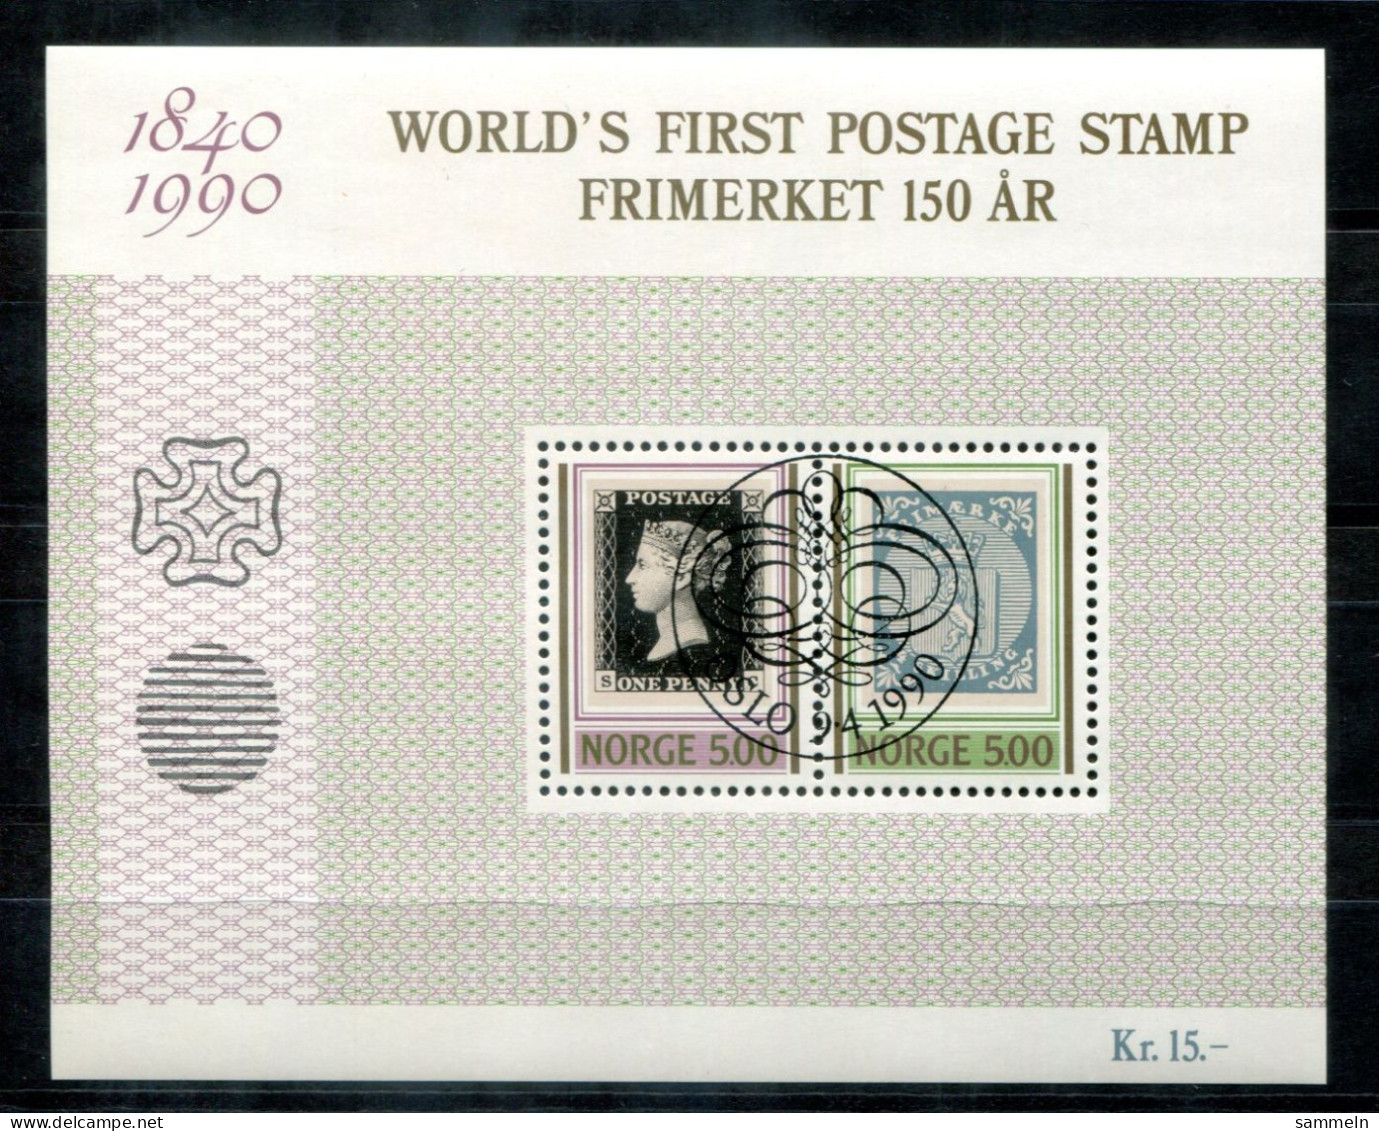 NORWEGEN Block 13, Bl.13 Spec.FD Canc. - Marke Auf Marke, Stamp On Stamp, Timbre Sur Timbre - NORWAY / NORVÈGE - Hojas Bloque